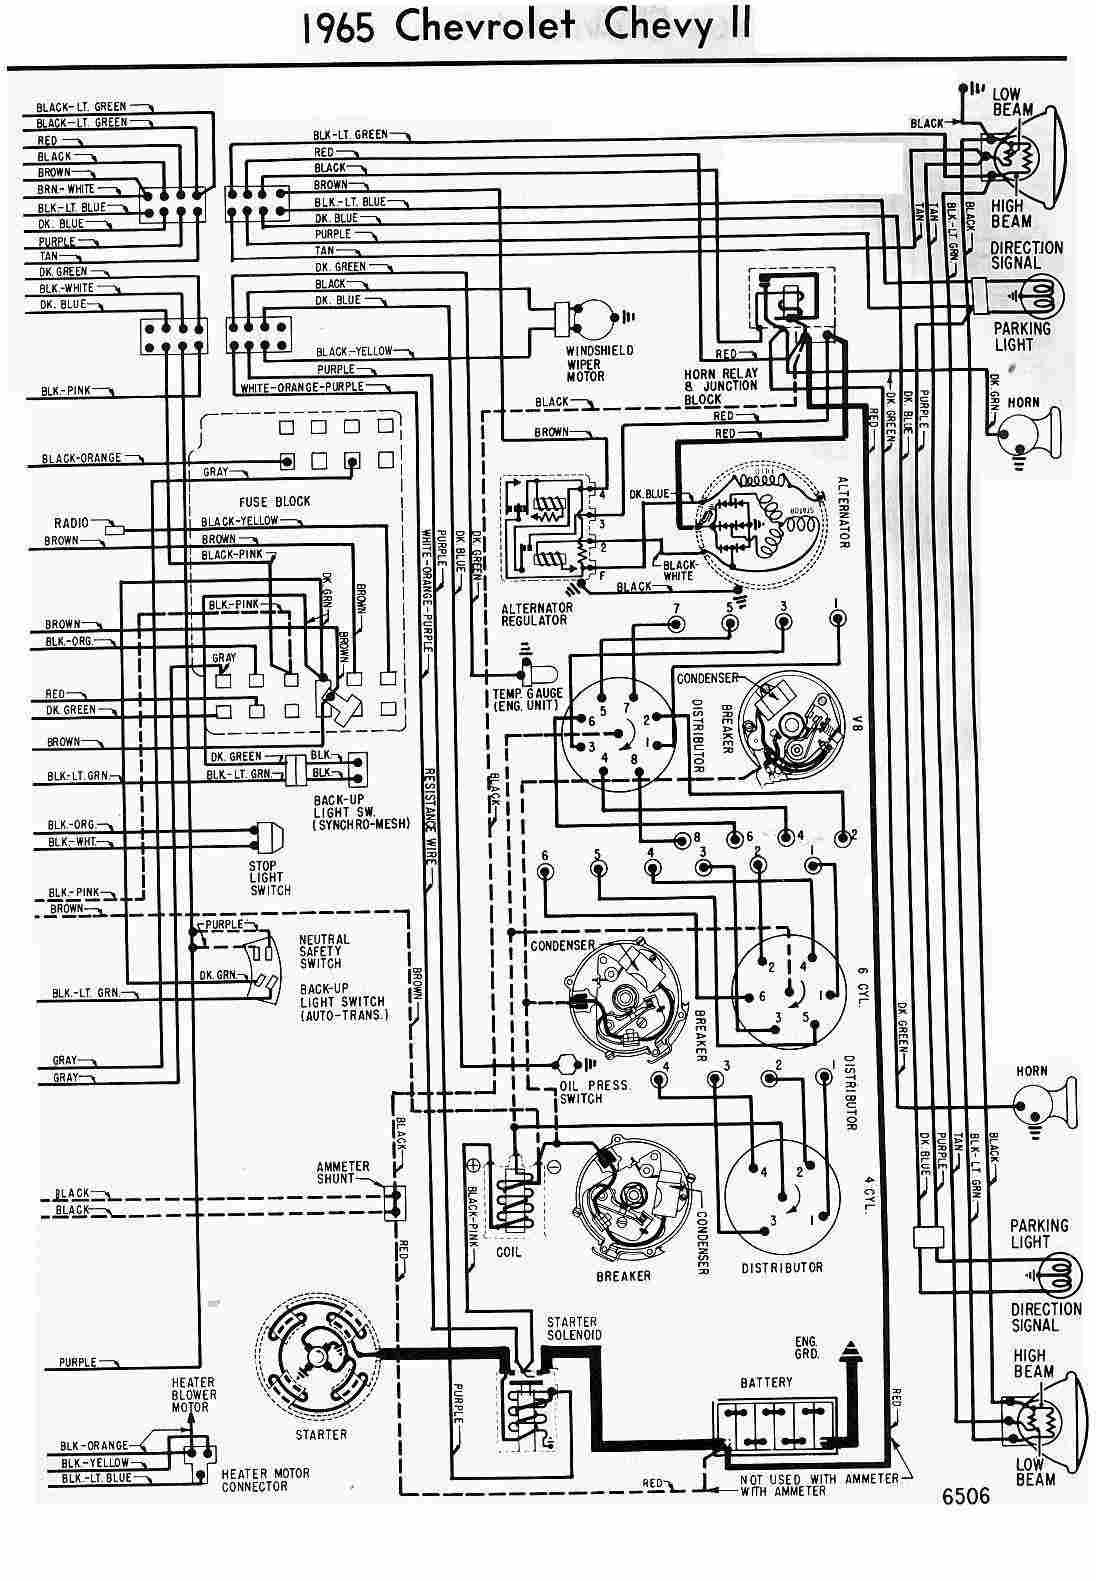 Chevrolet Car Pdf Manual Wiring, Wiring Diagram For Cars Pdf